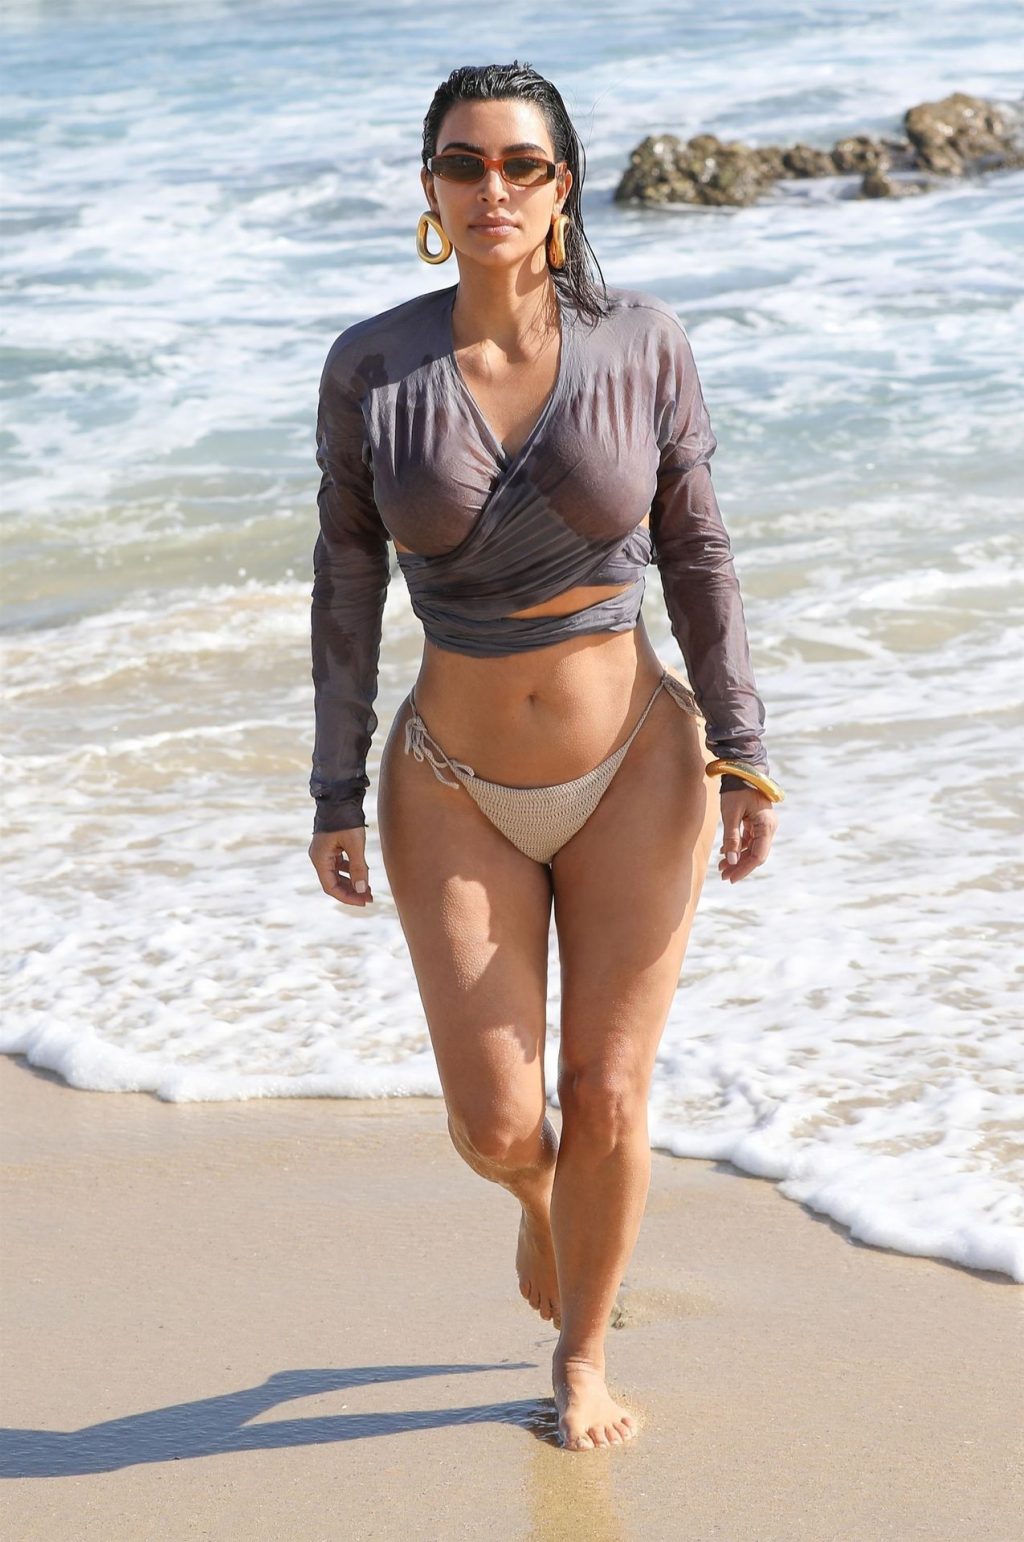 Kim Kardashian Puts on a Sultry Display on the Beach in Malibu (14 Photos)